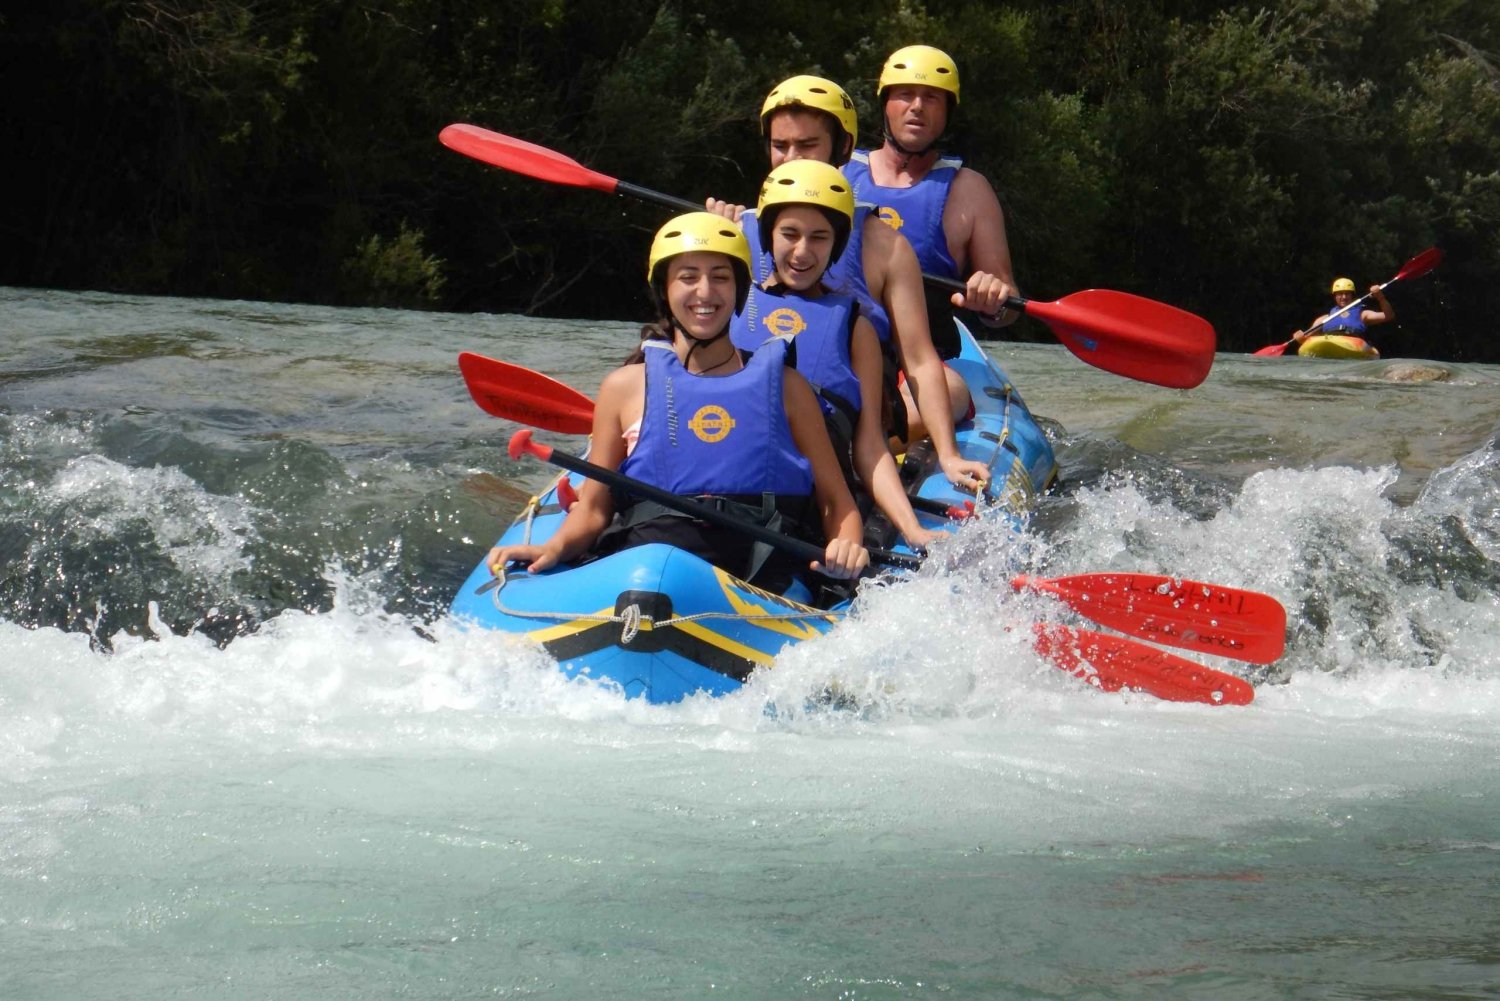 Radovljica : Tour de rafting sur la rivière Sava avec Mini Raft